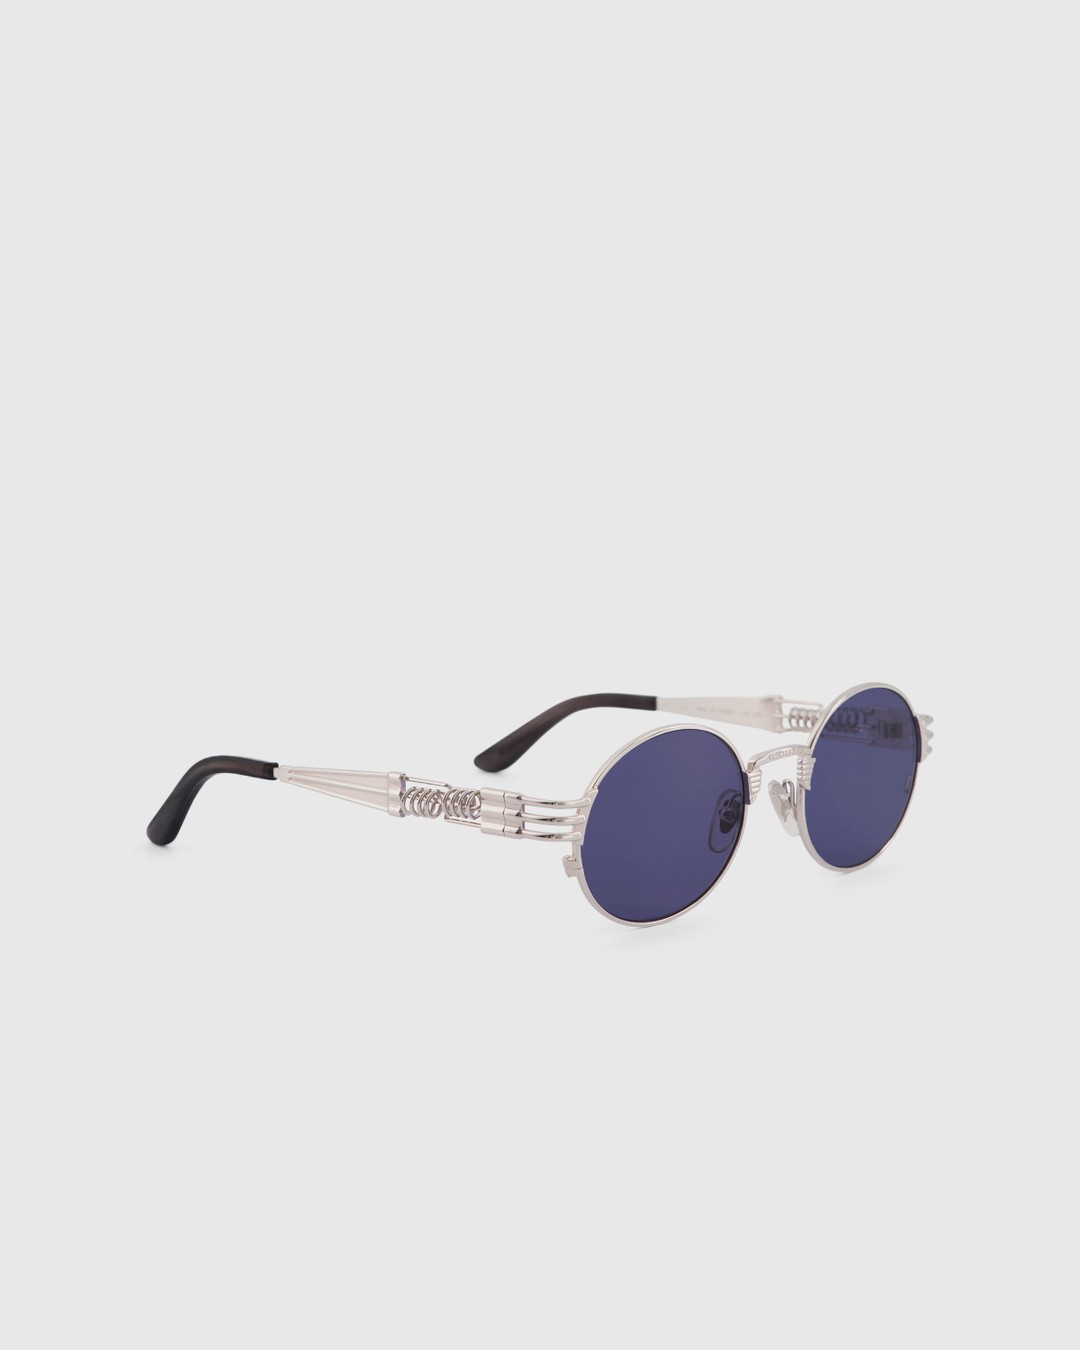 Jean Paul Gaultier x Burna Boy – 56-6106 Double Resort Sunglasses